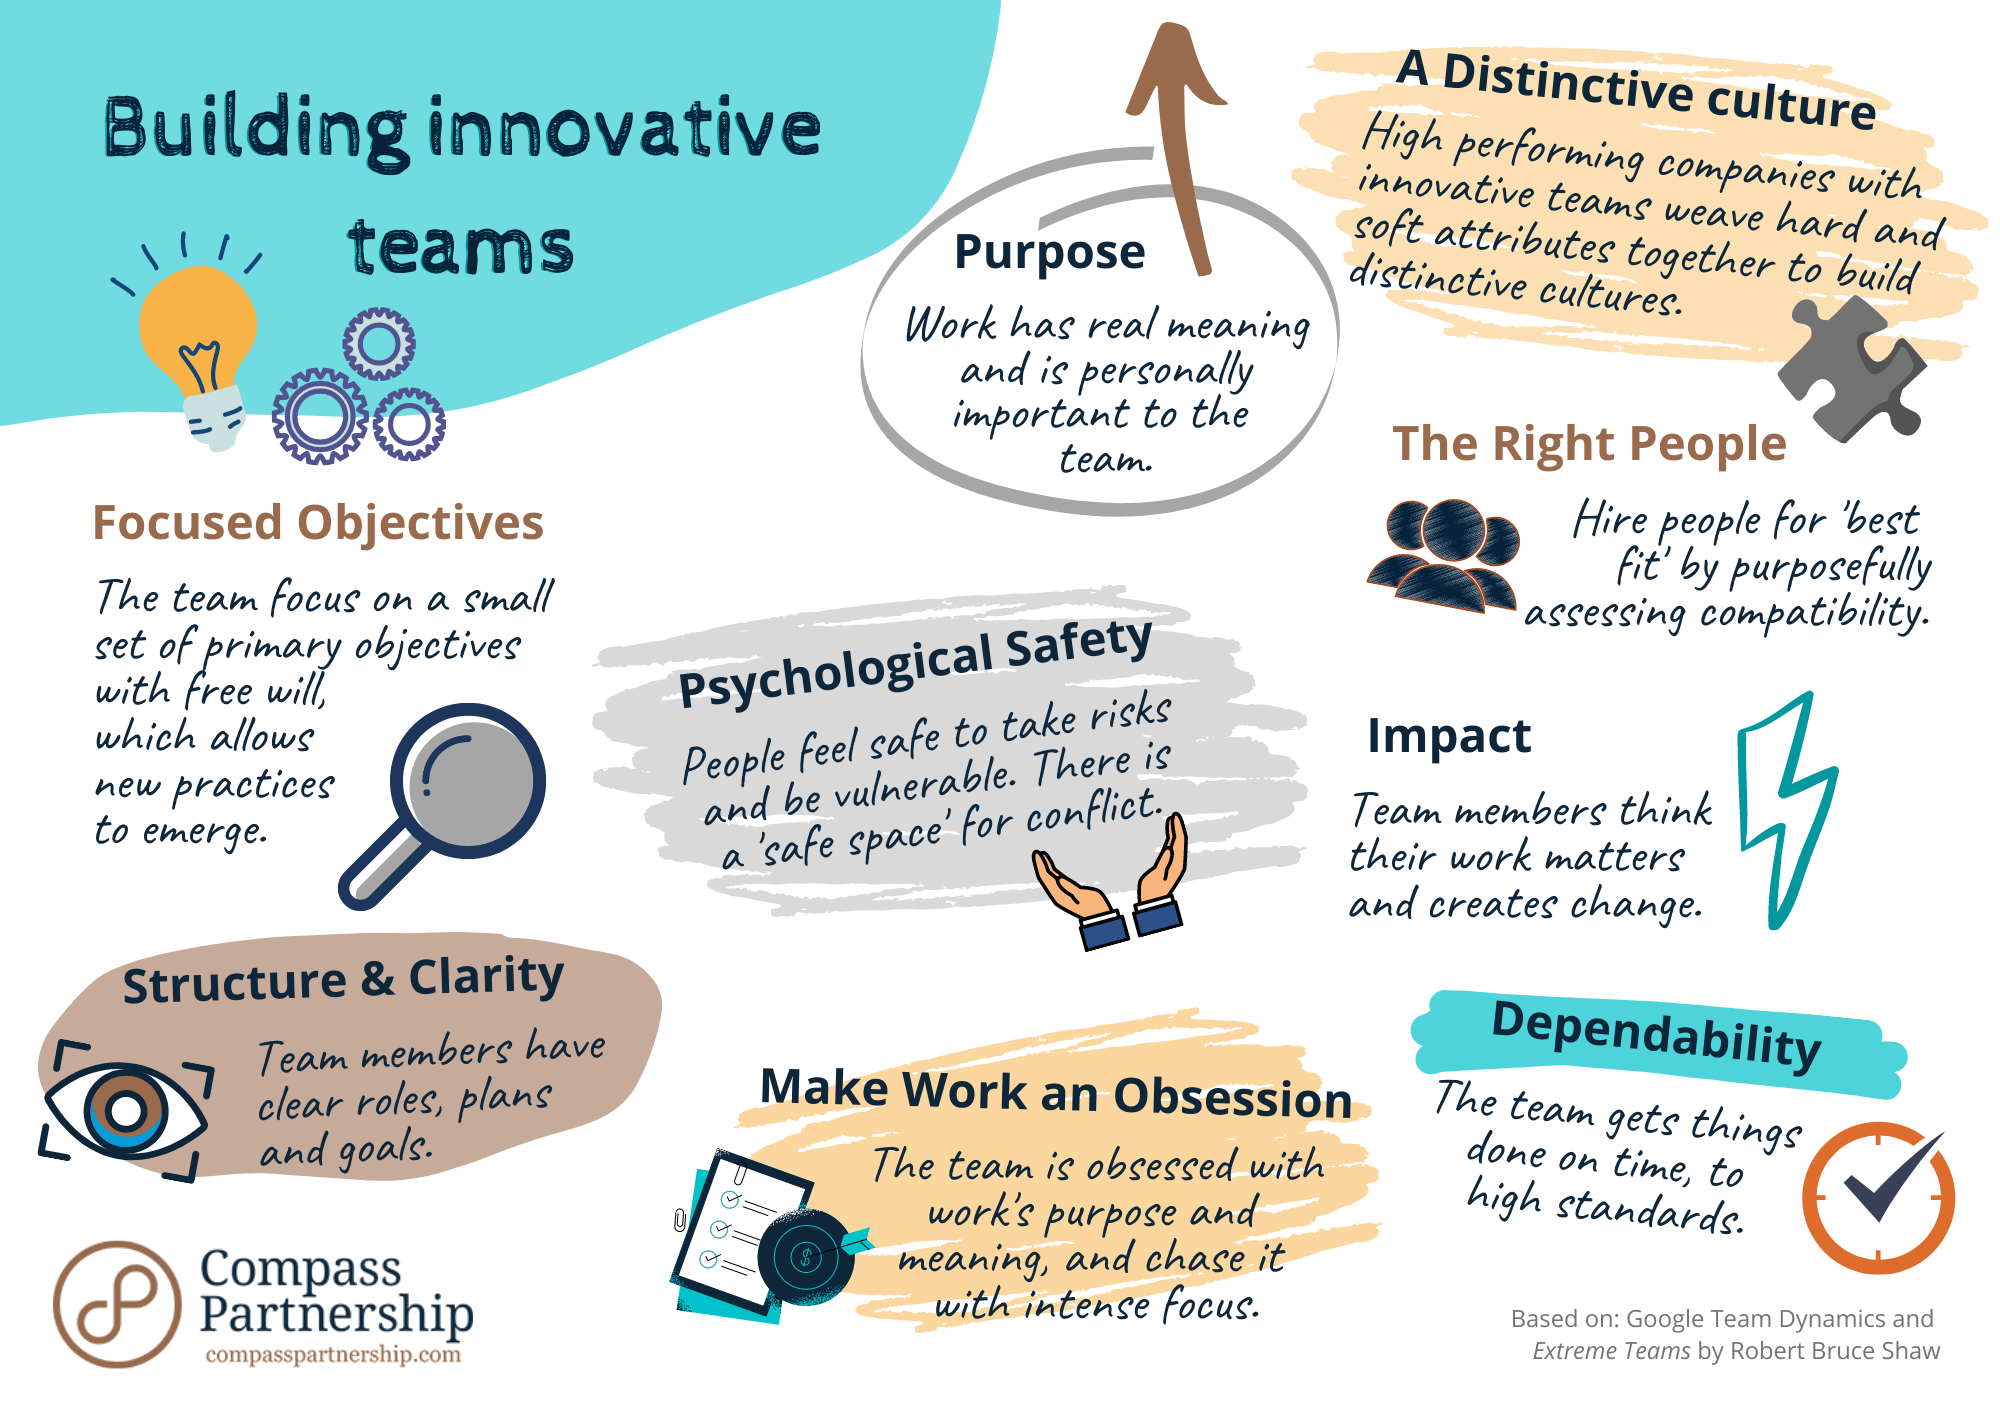 Building innovative teams